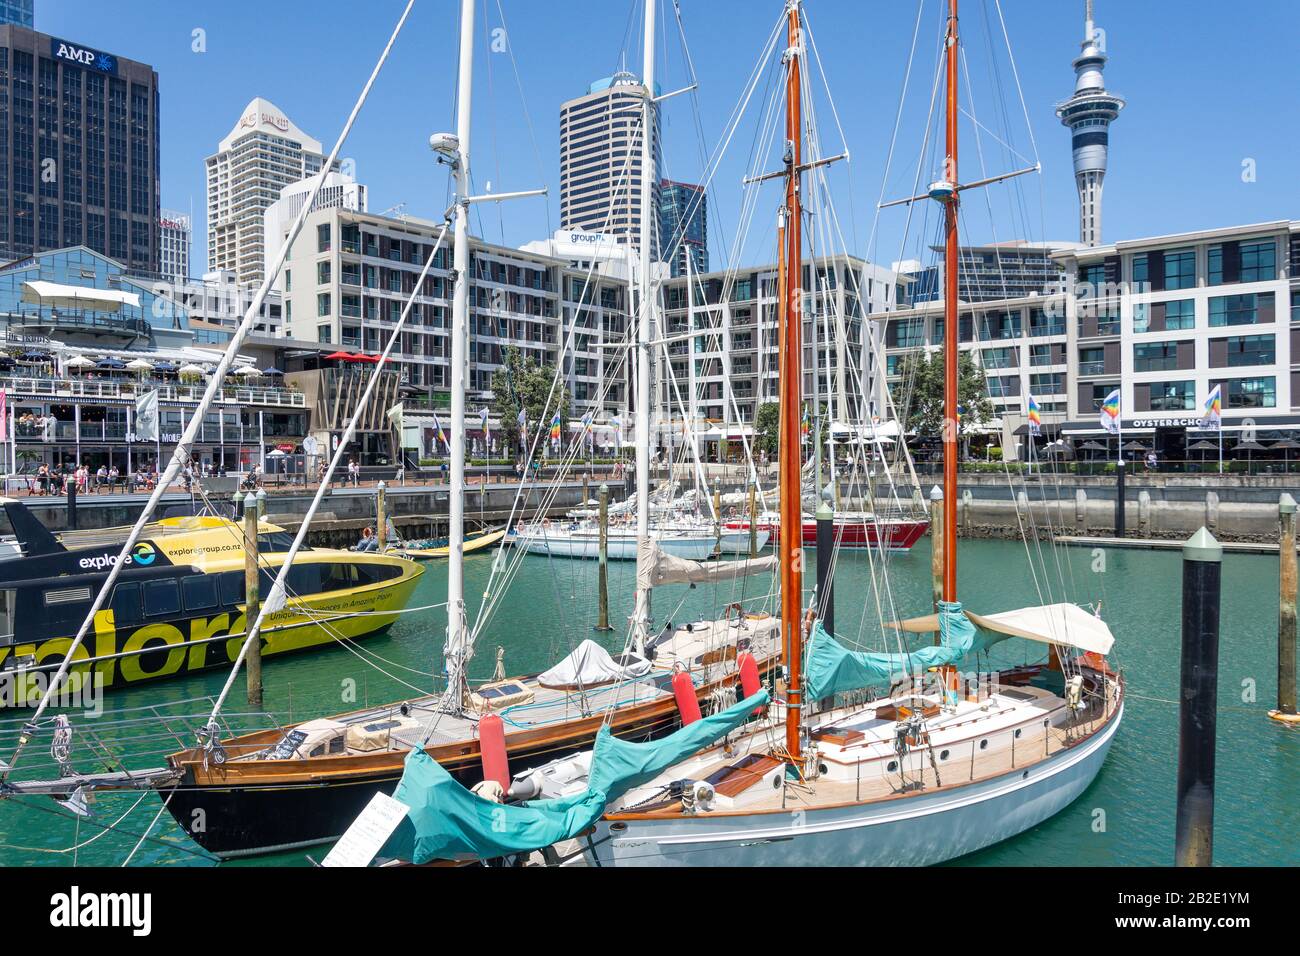 Viaduct Harbour, Auckland Waterfront, Stadtzentrum, Auckland, Auckland Region, Neuseeland Stockfoto